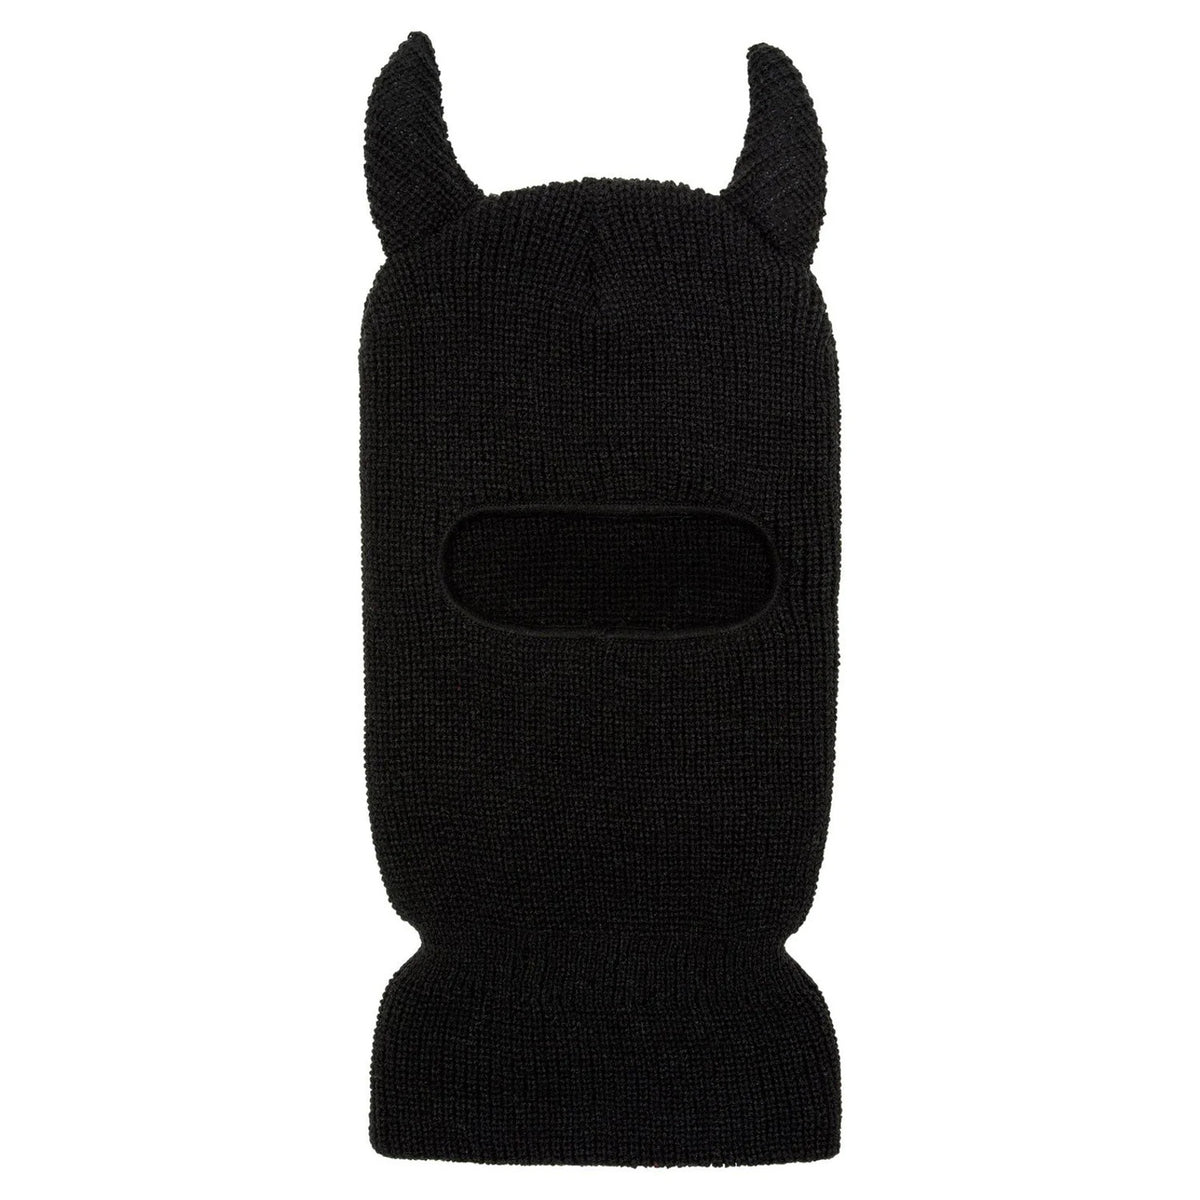 Devil Horns Ear Ski Mask Black Balaclava